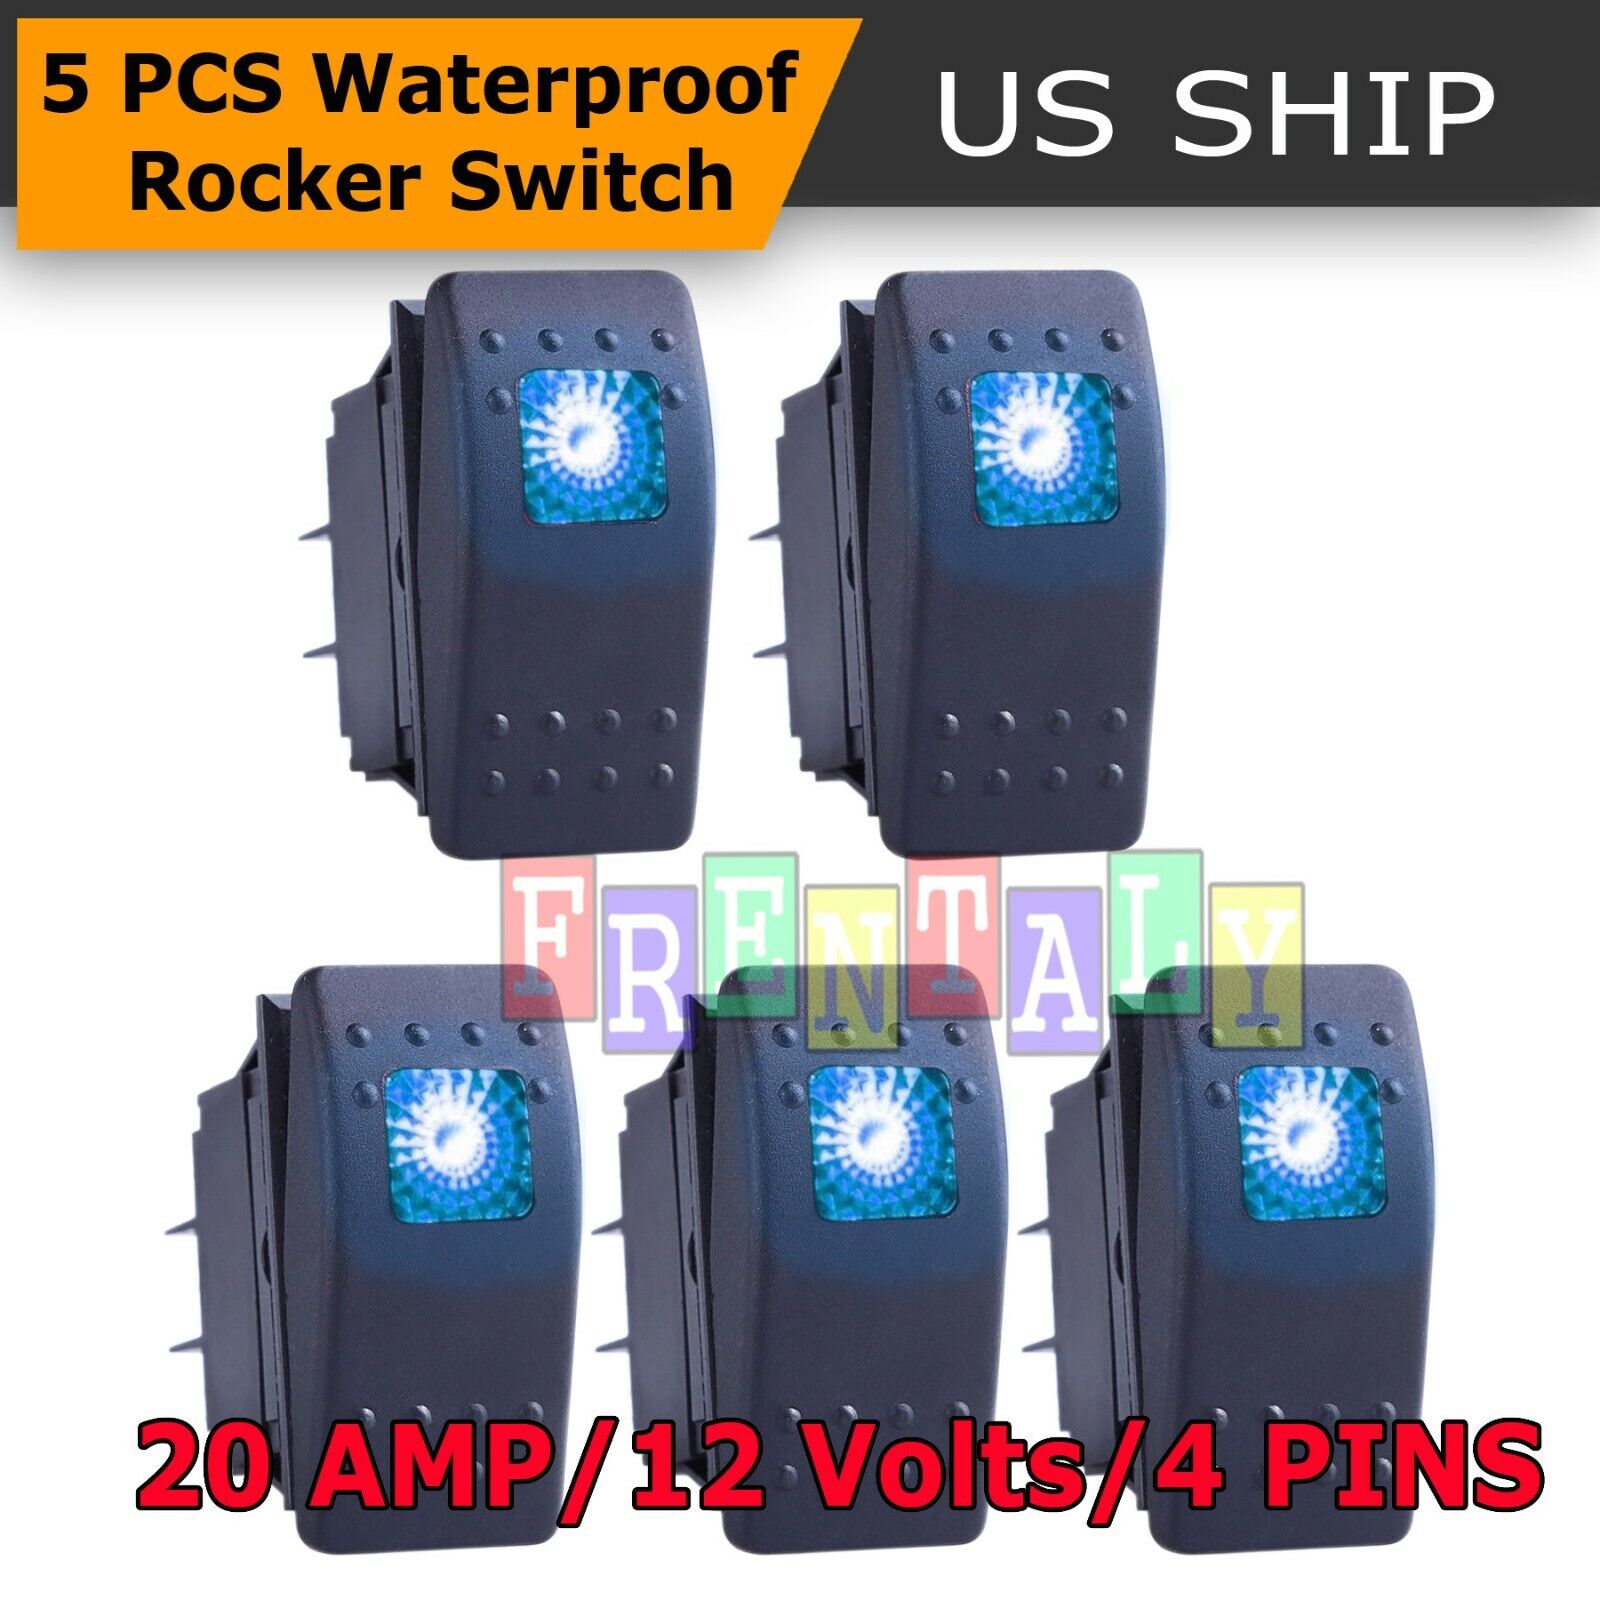 5 x Waterproof MARINE BOAT CAR Rocker Switch 12V ON-OFF 4 PIN Blue LED Light